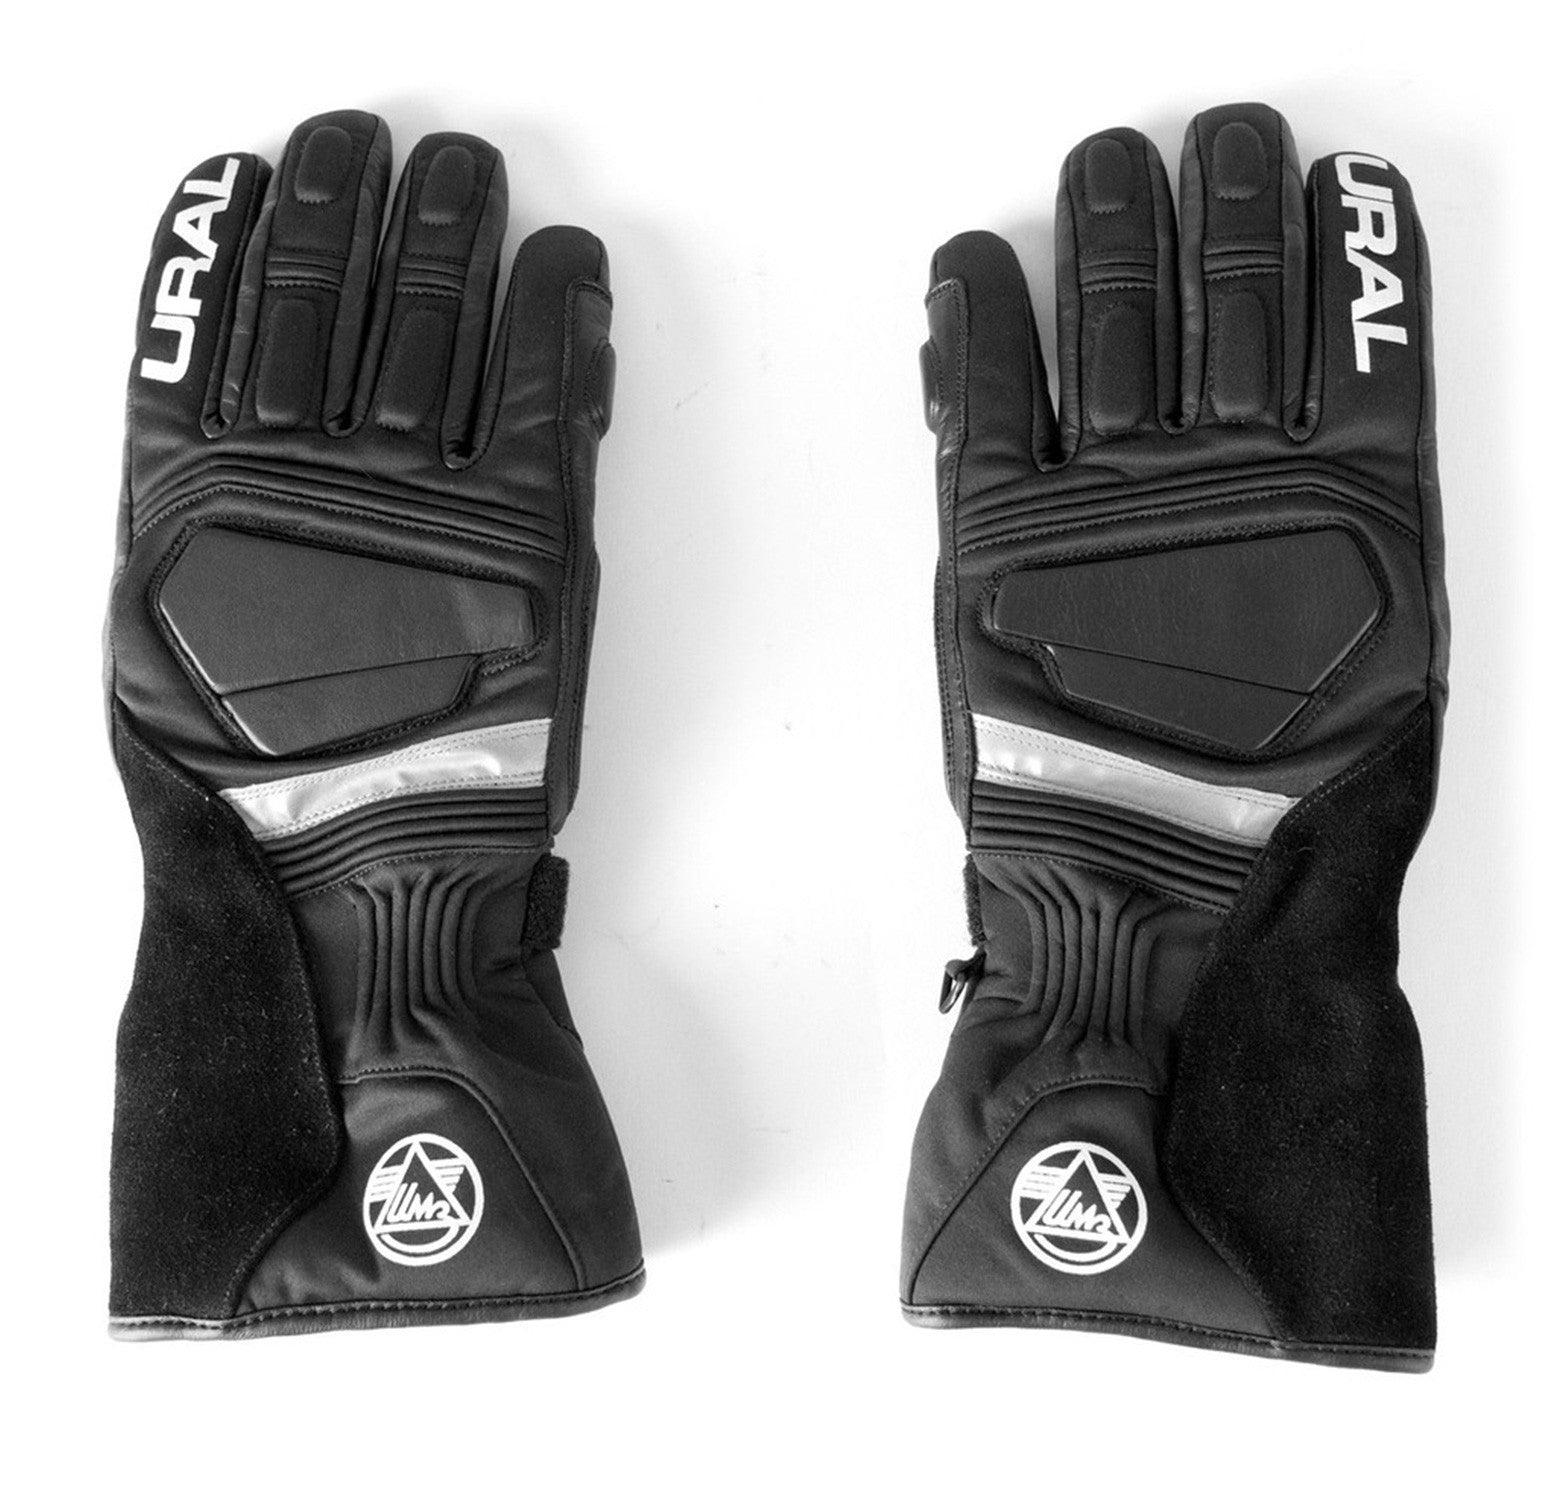 Ural Winter Gloves